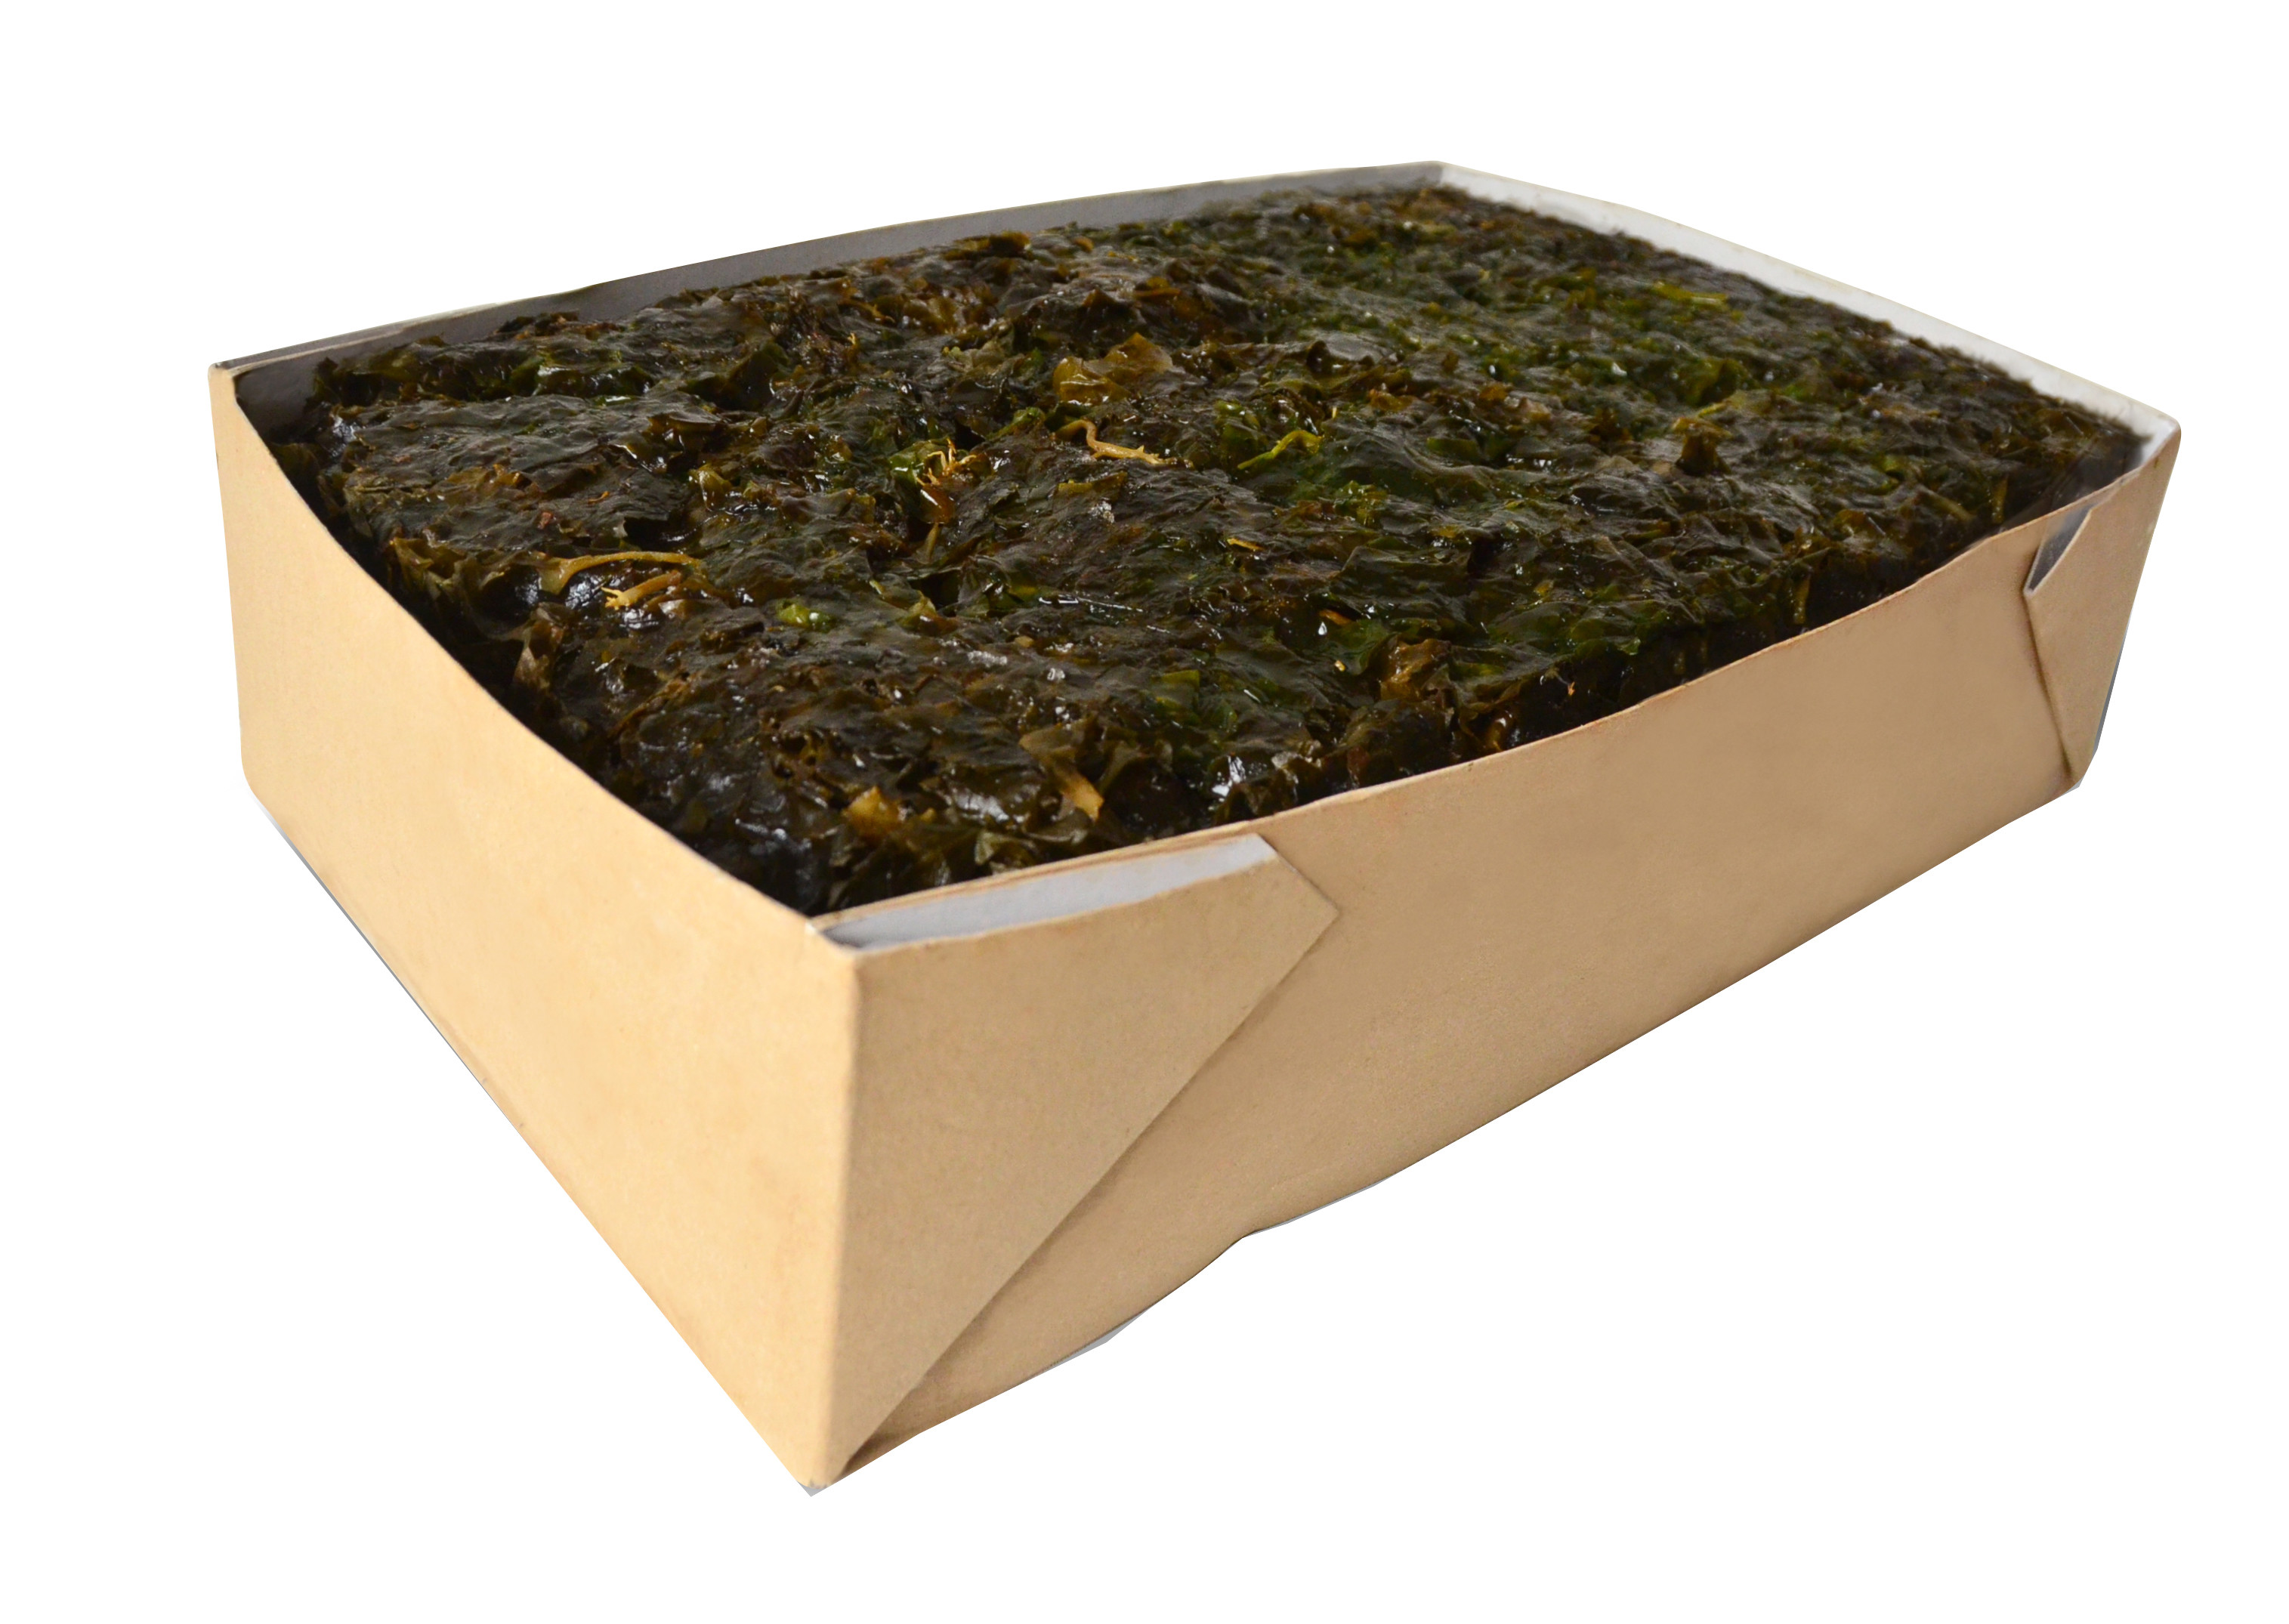 Seaweed in a box